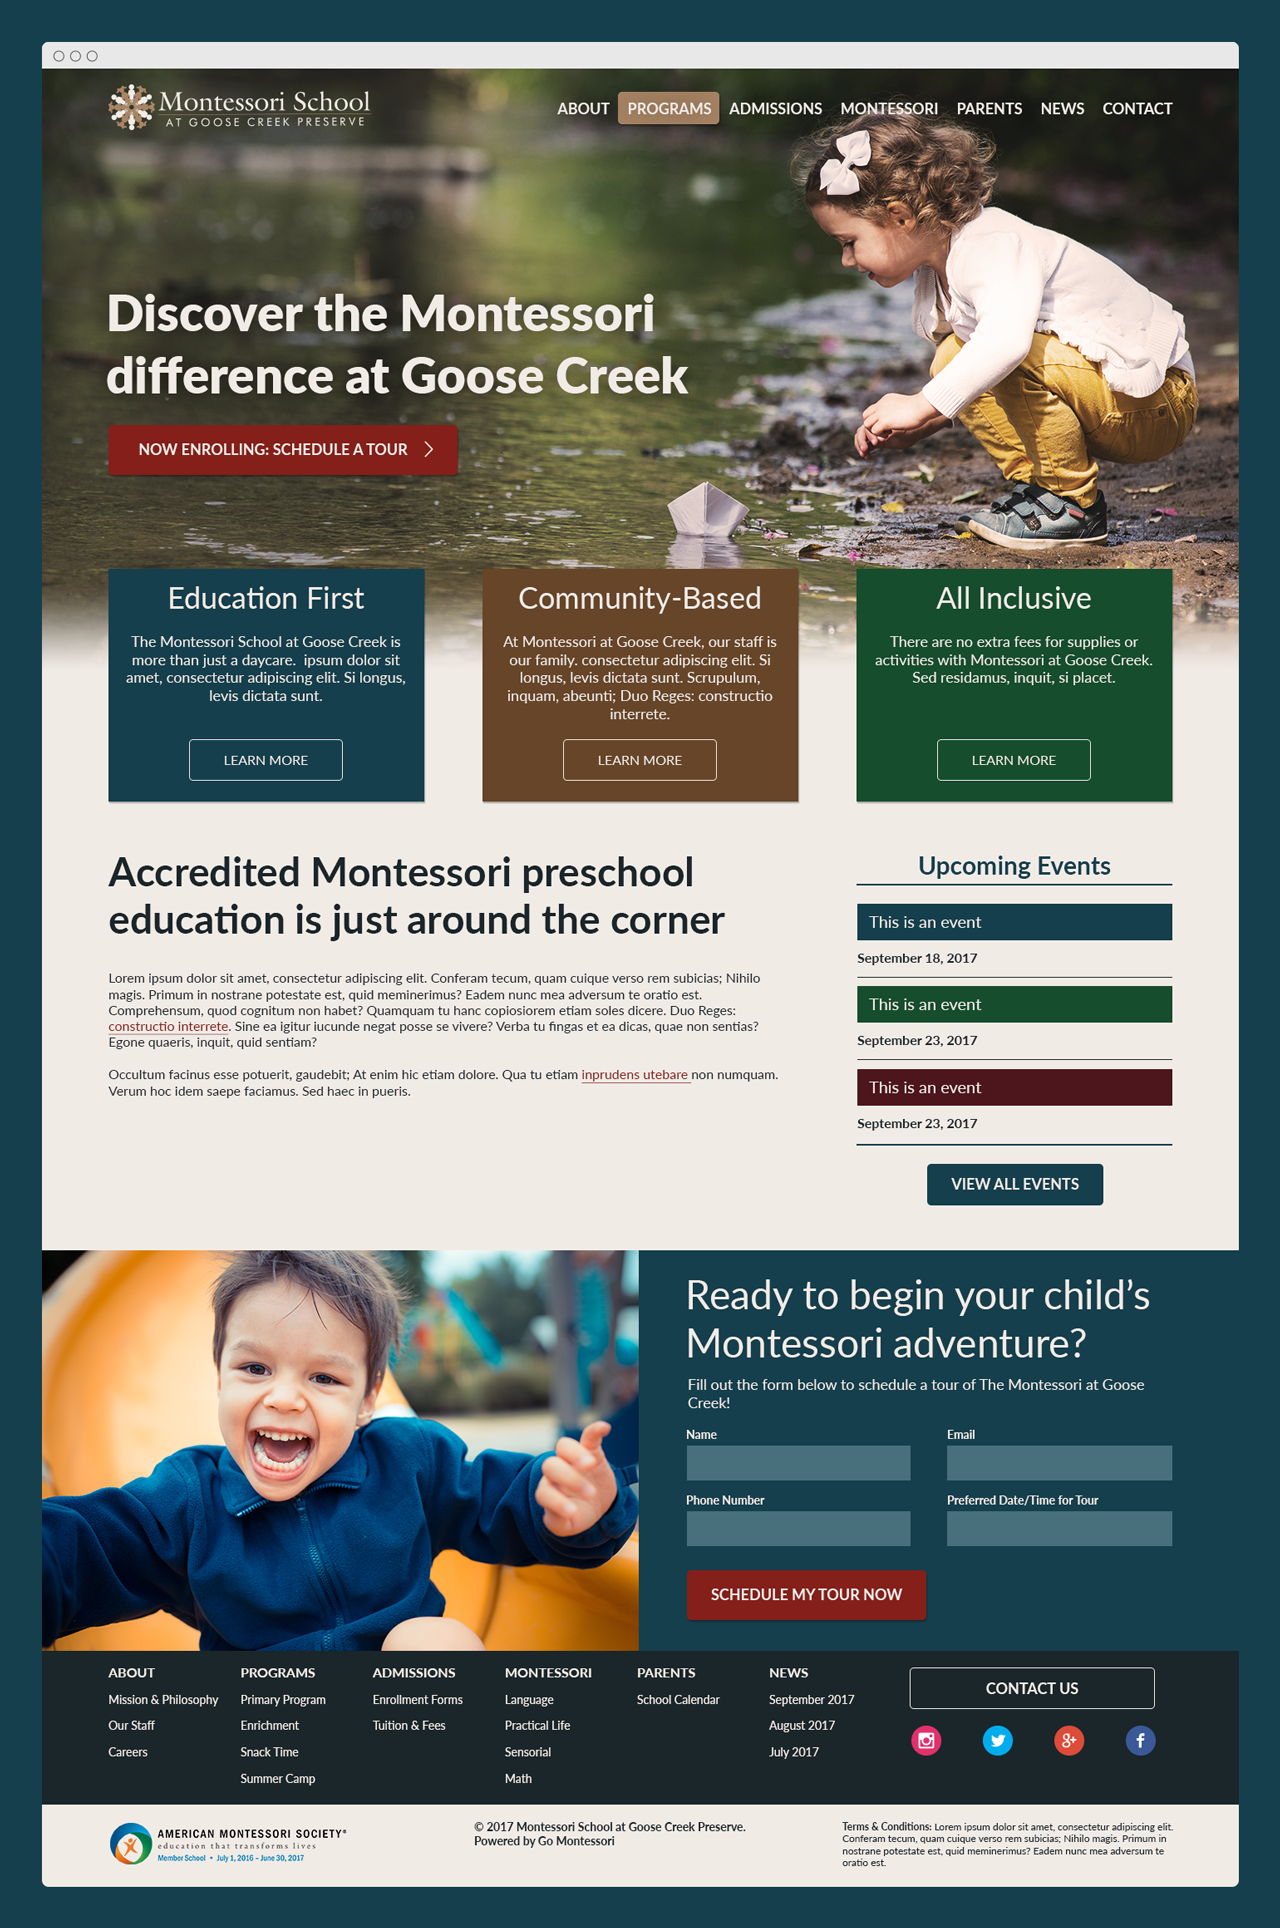 Go Montessori custom site design for Goose Creek Montessori School